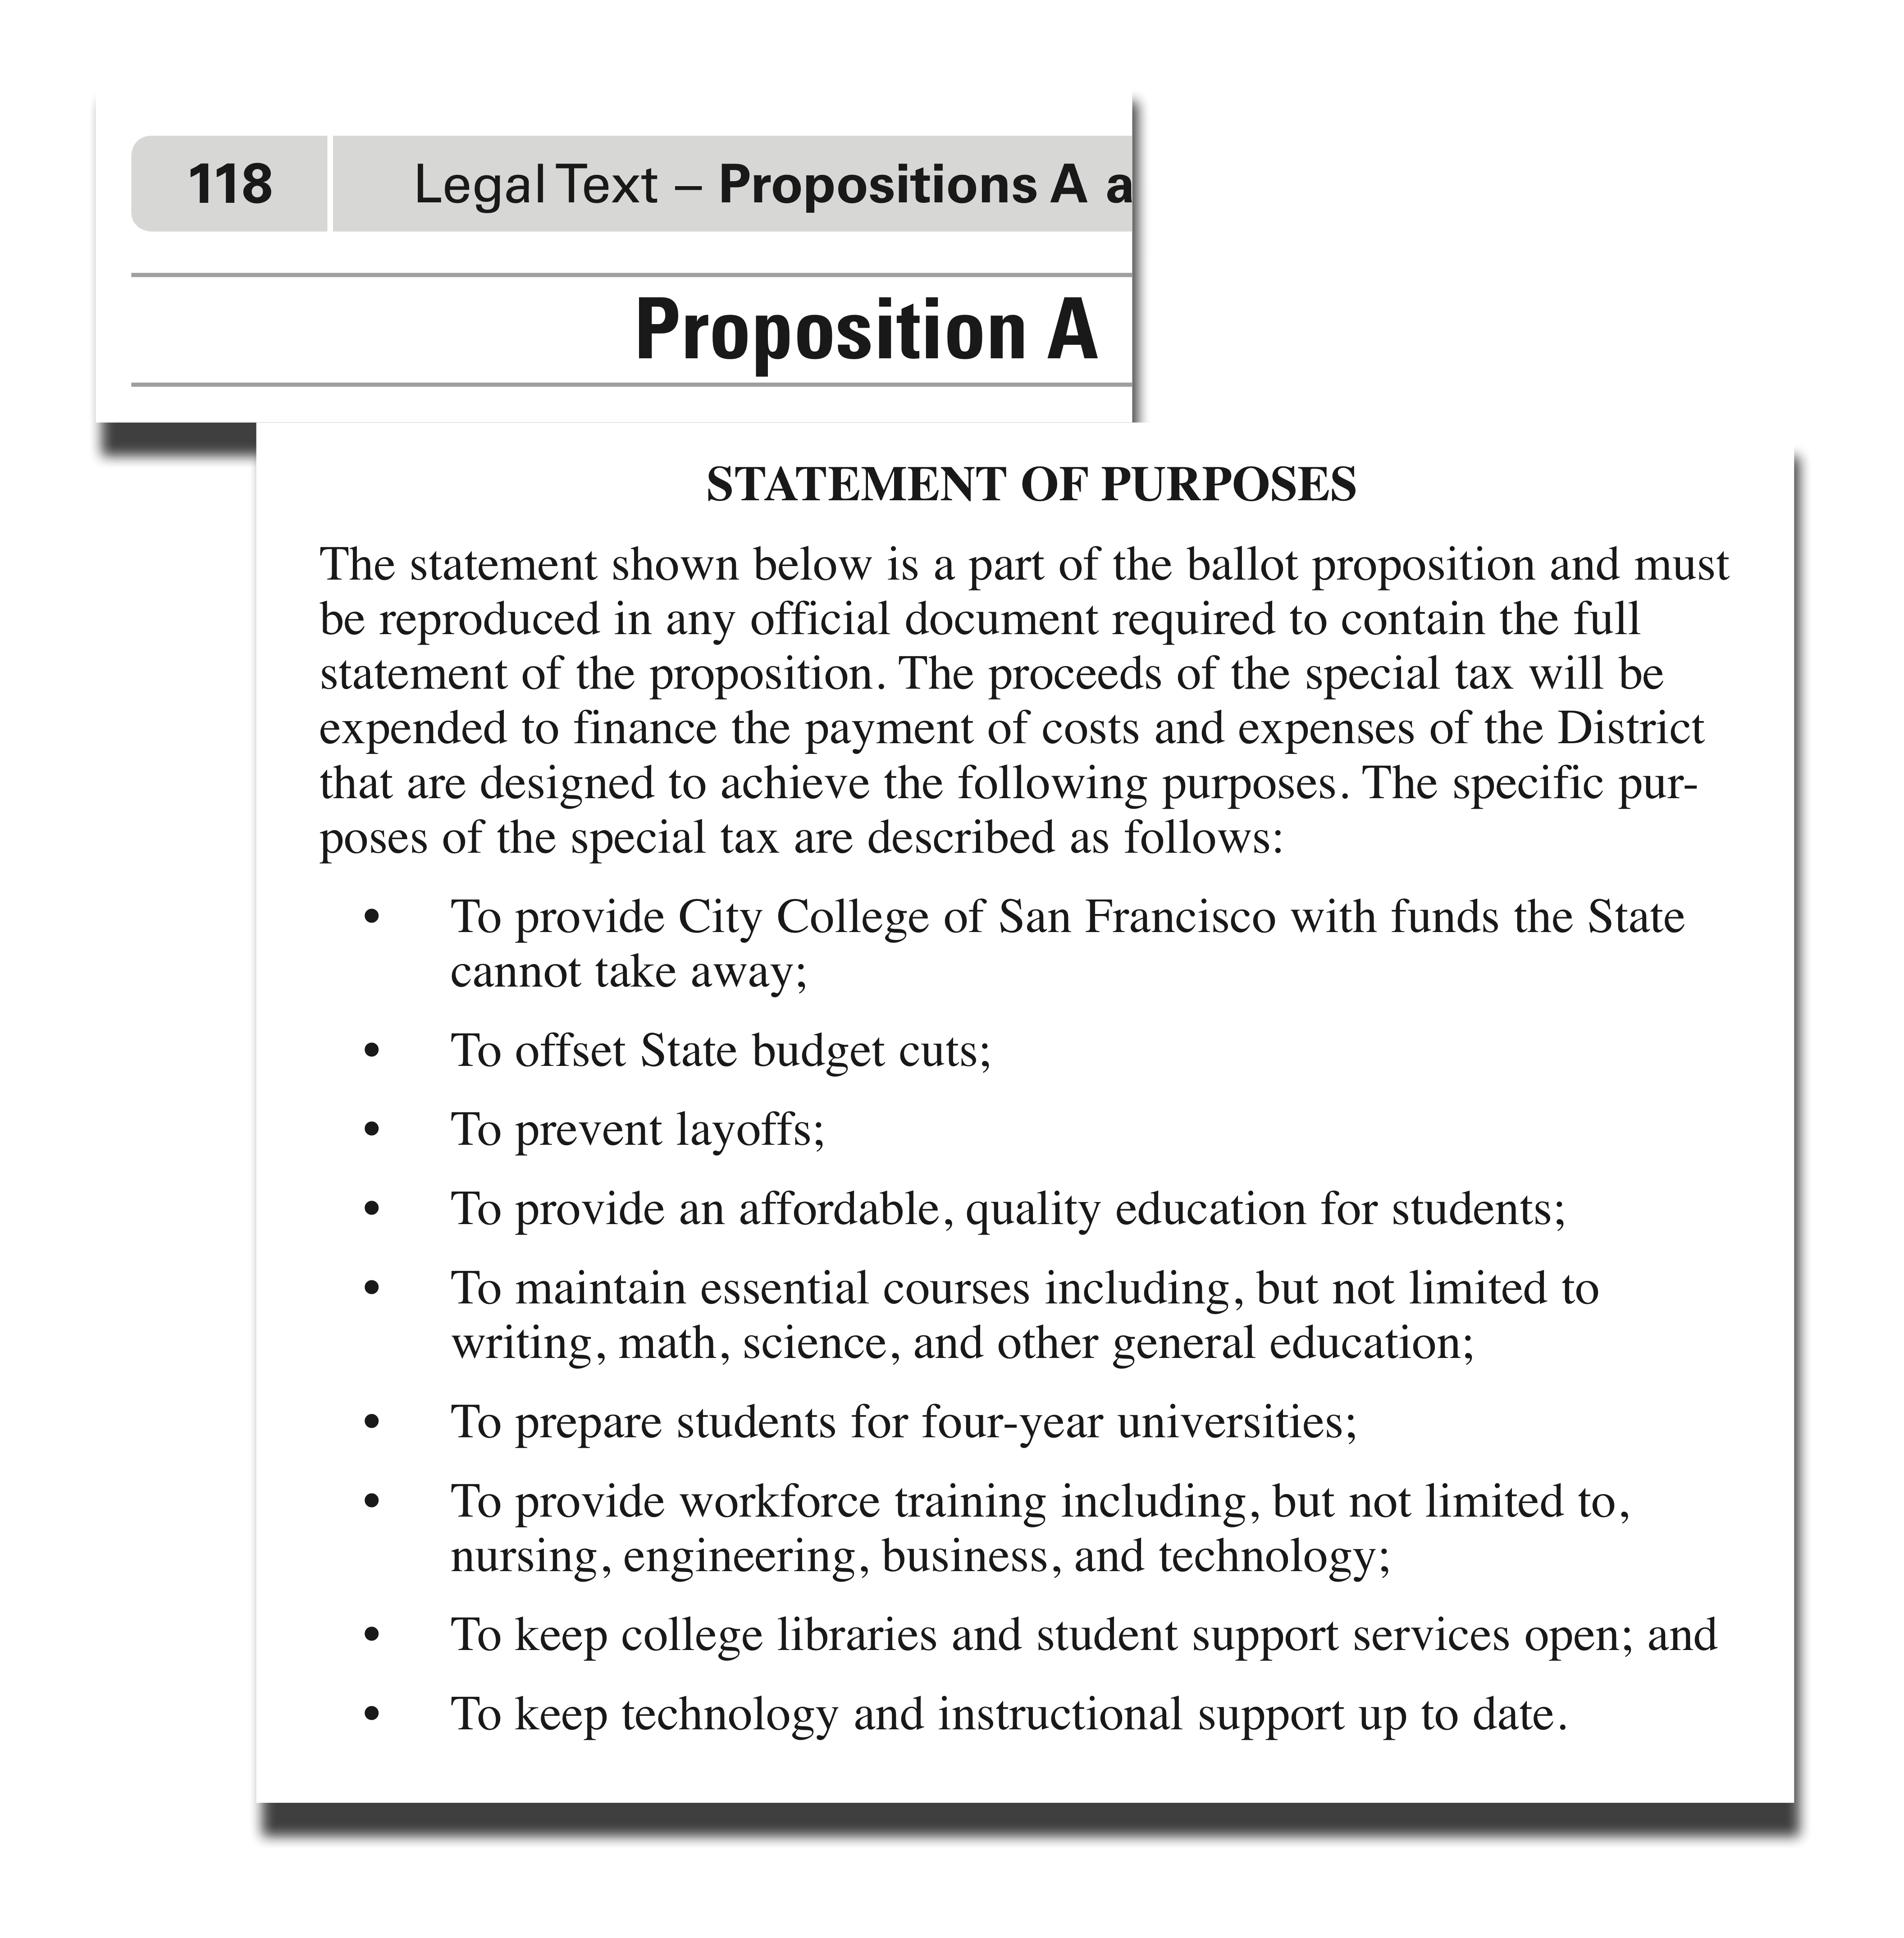 Voter handbook legal text of Prop A -- Purpose